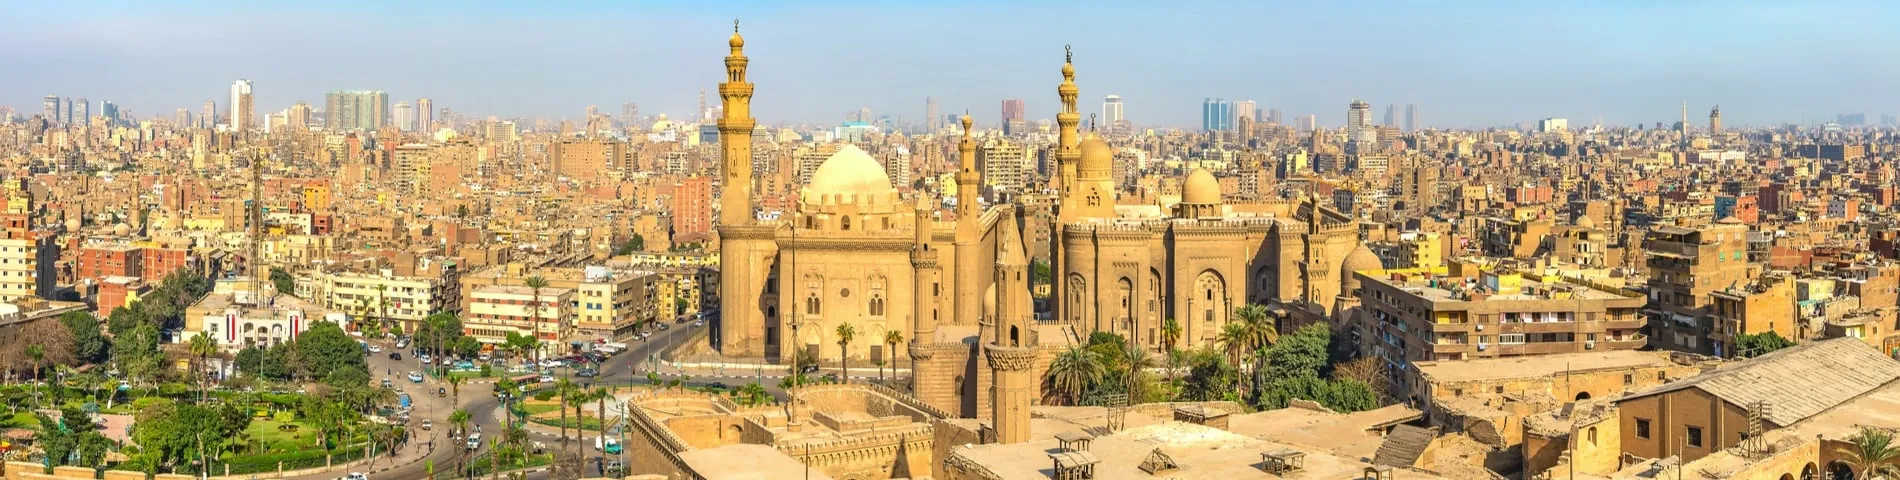 Kair - Inne egzaminy